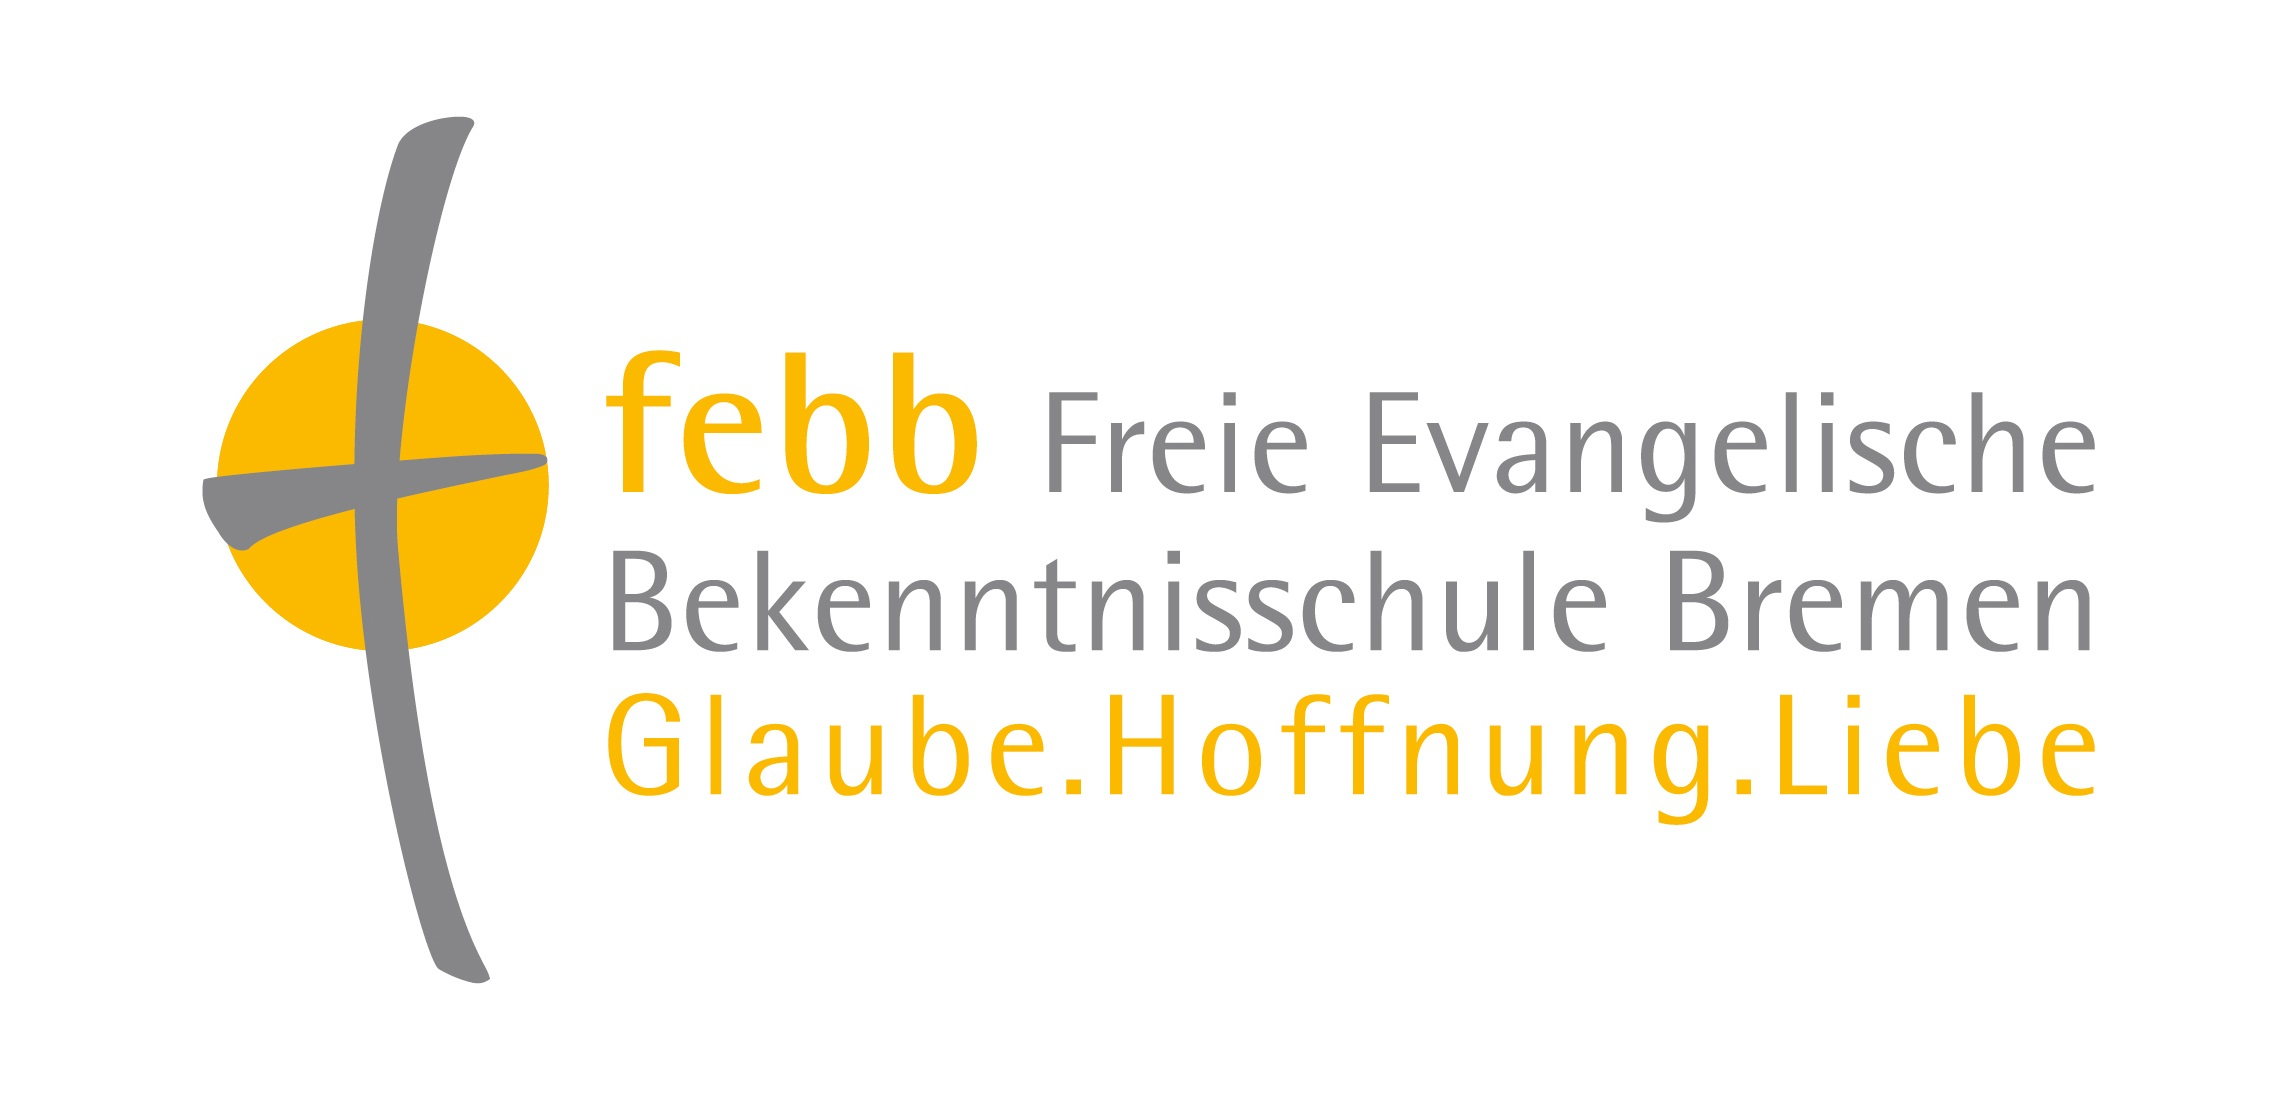 Freie Evangelische Bekenntnisschule Bremen e.V.